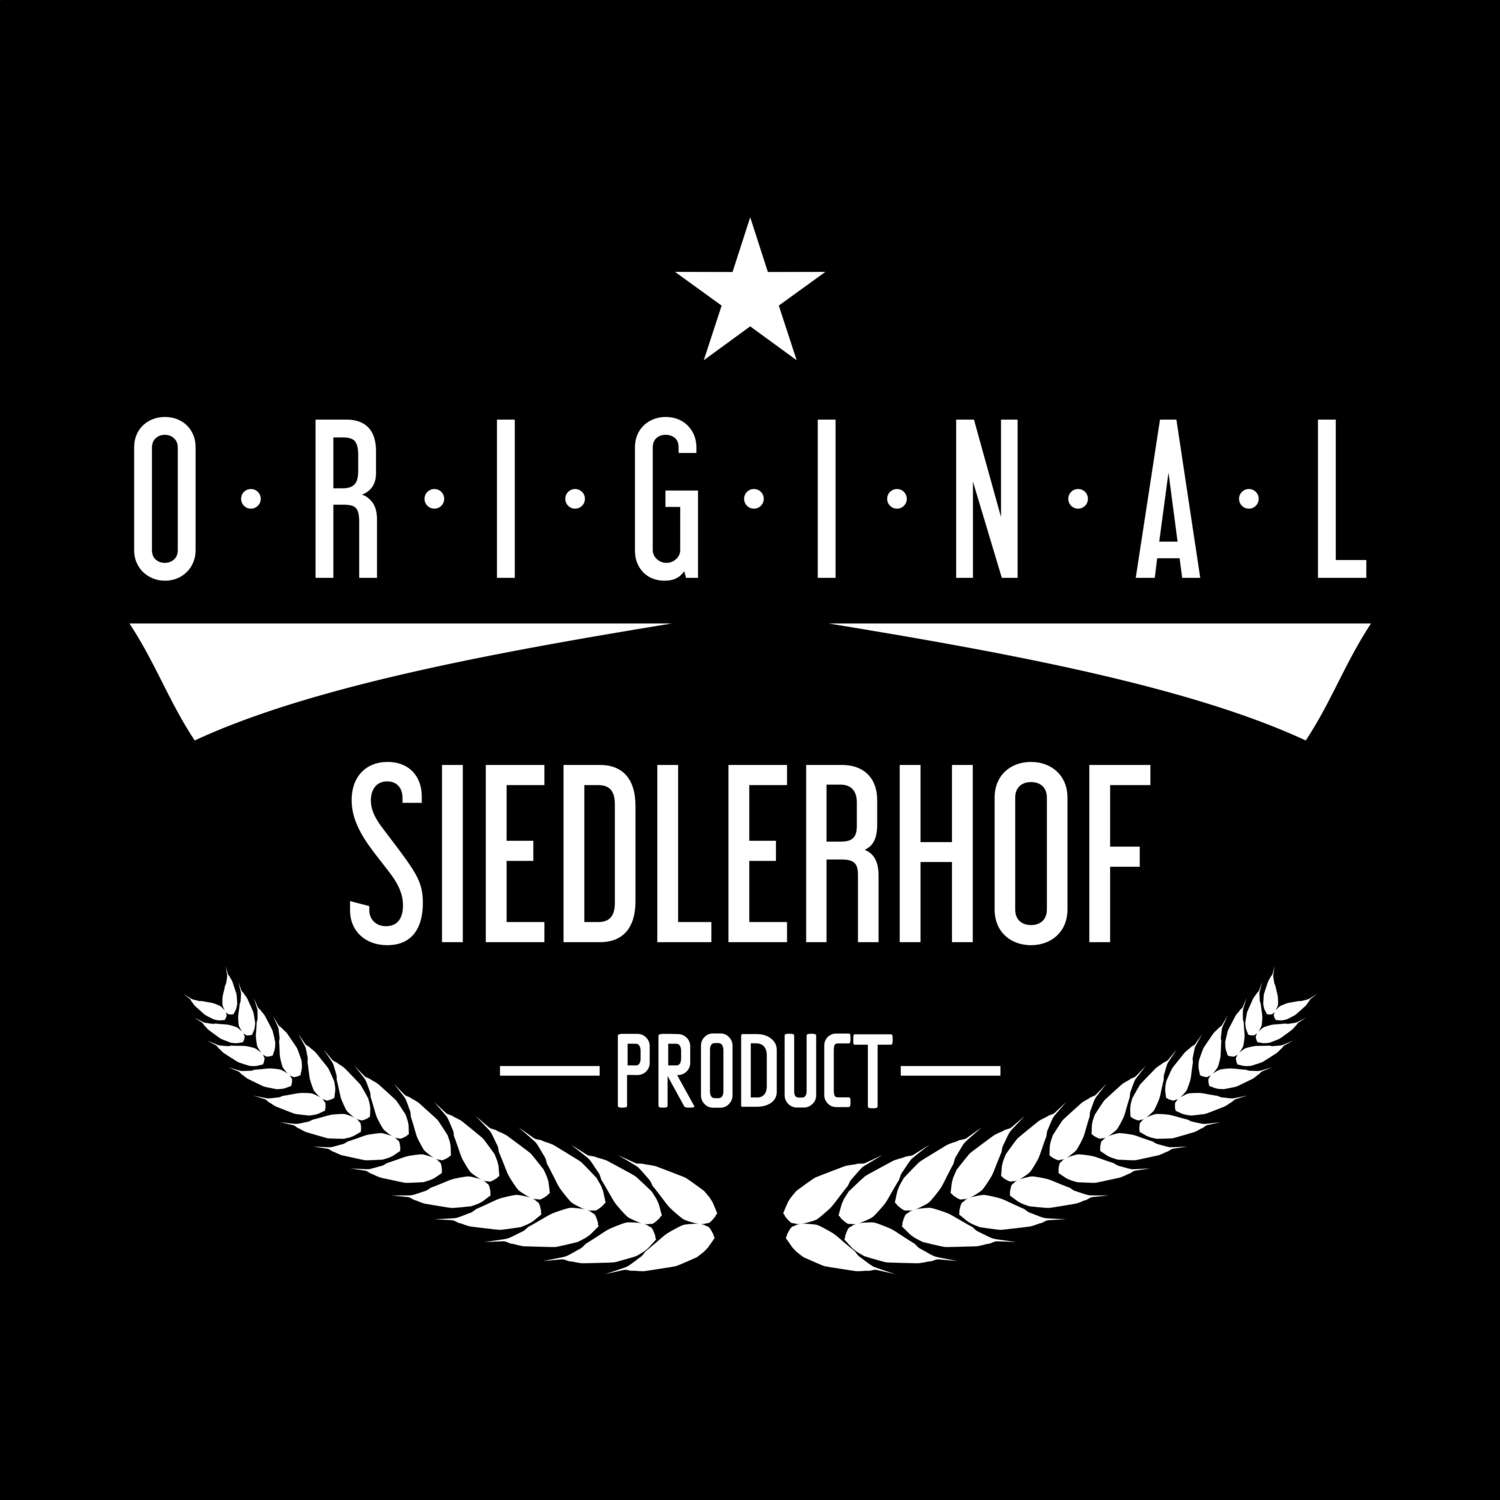 Siedlerhof T-Shirt »Original Product«